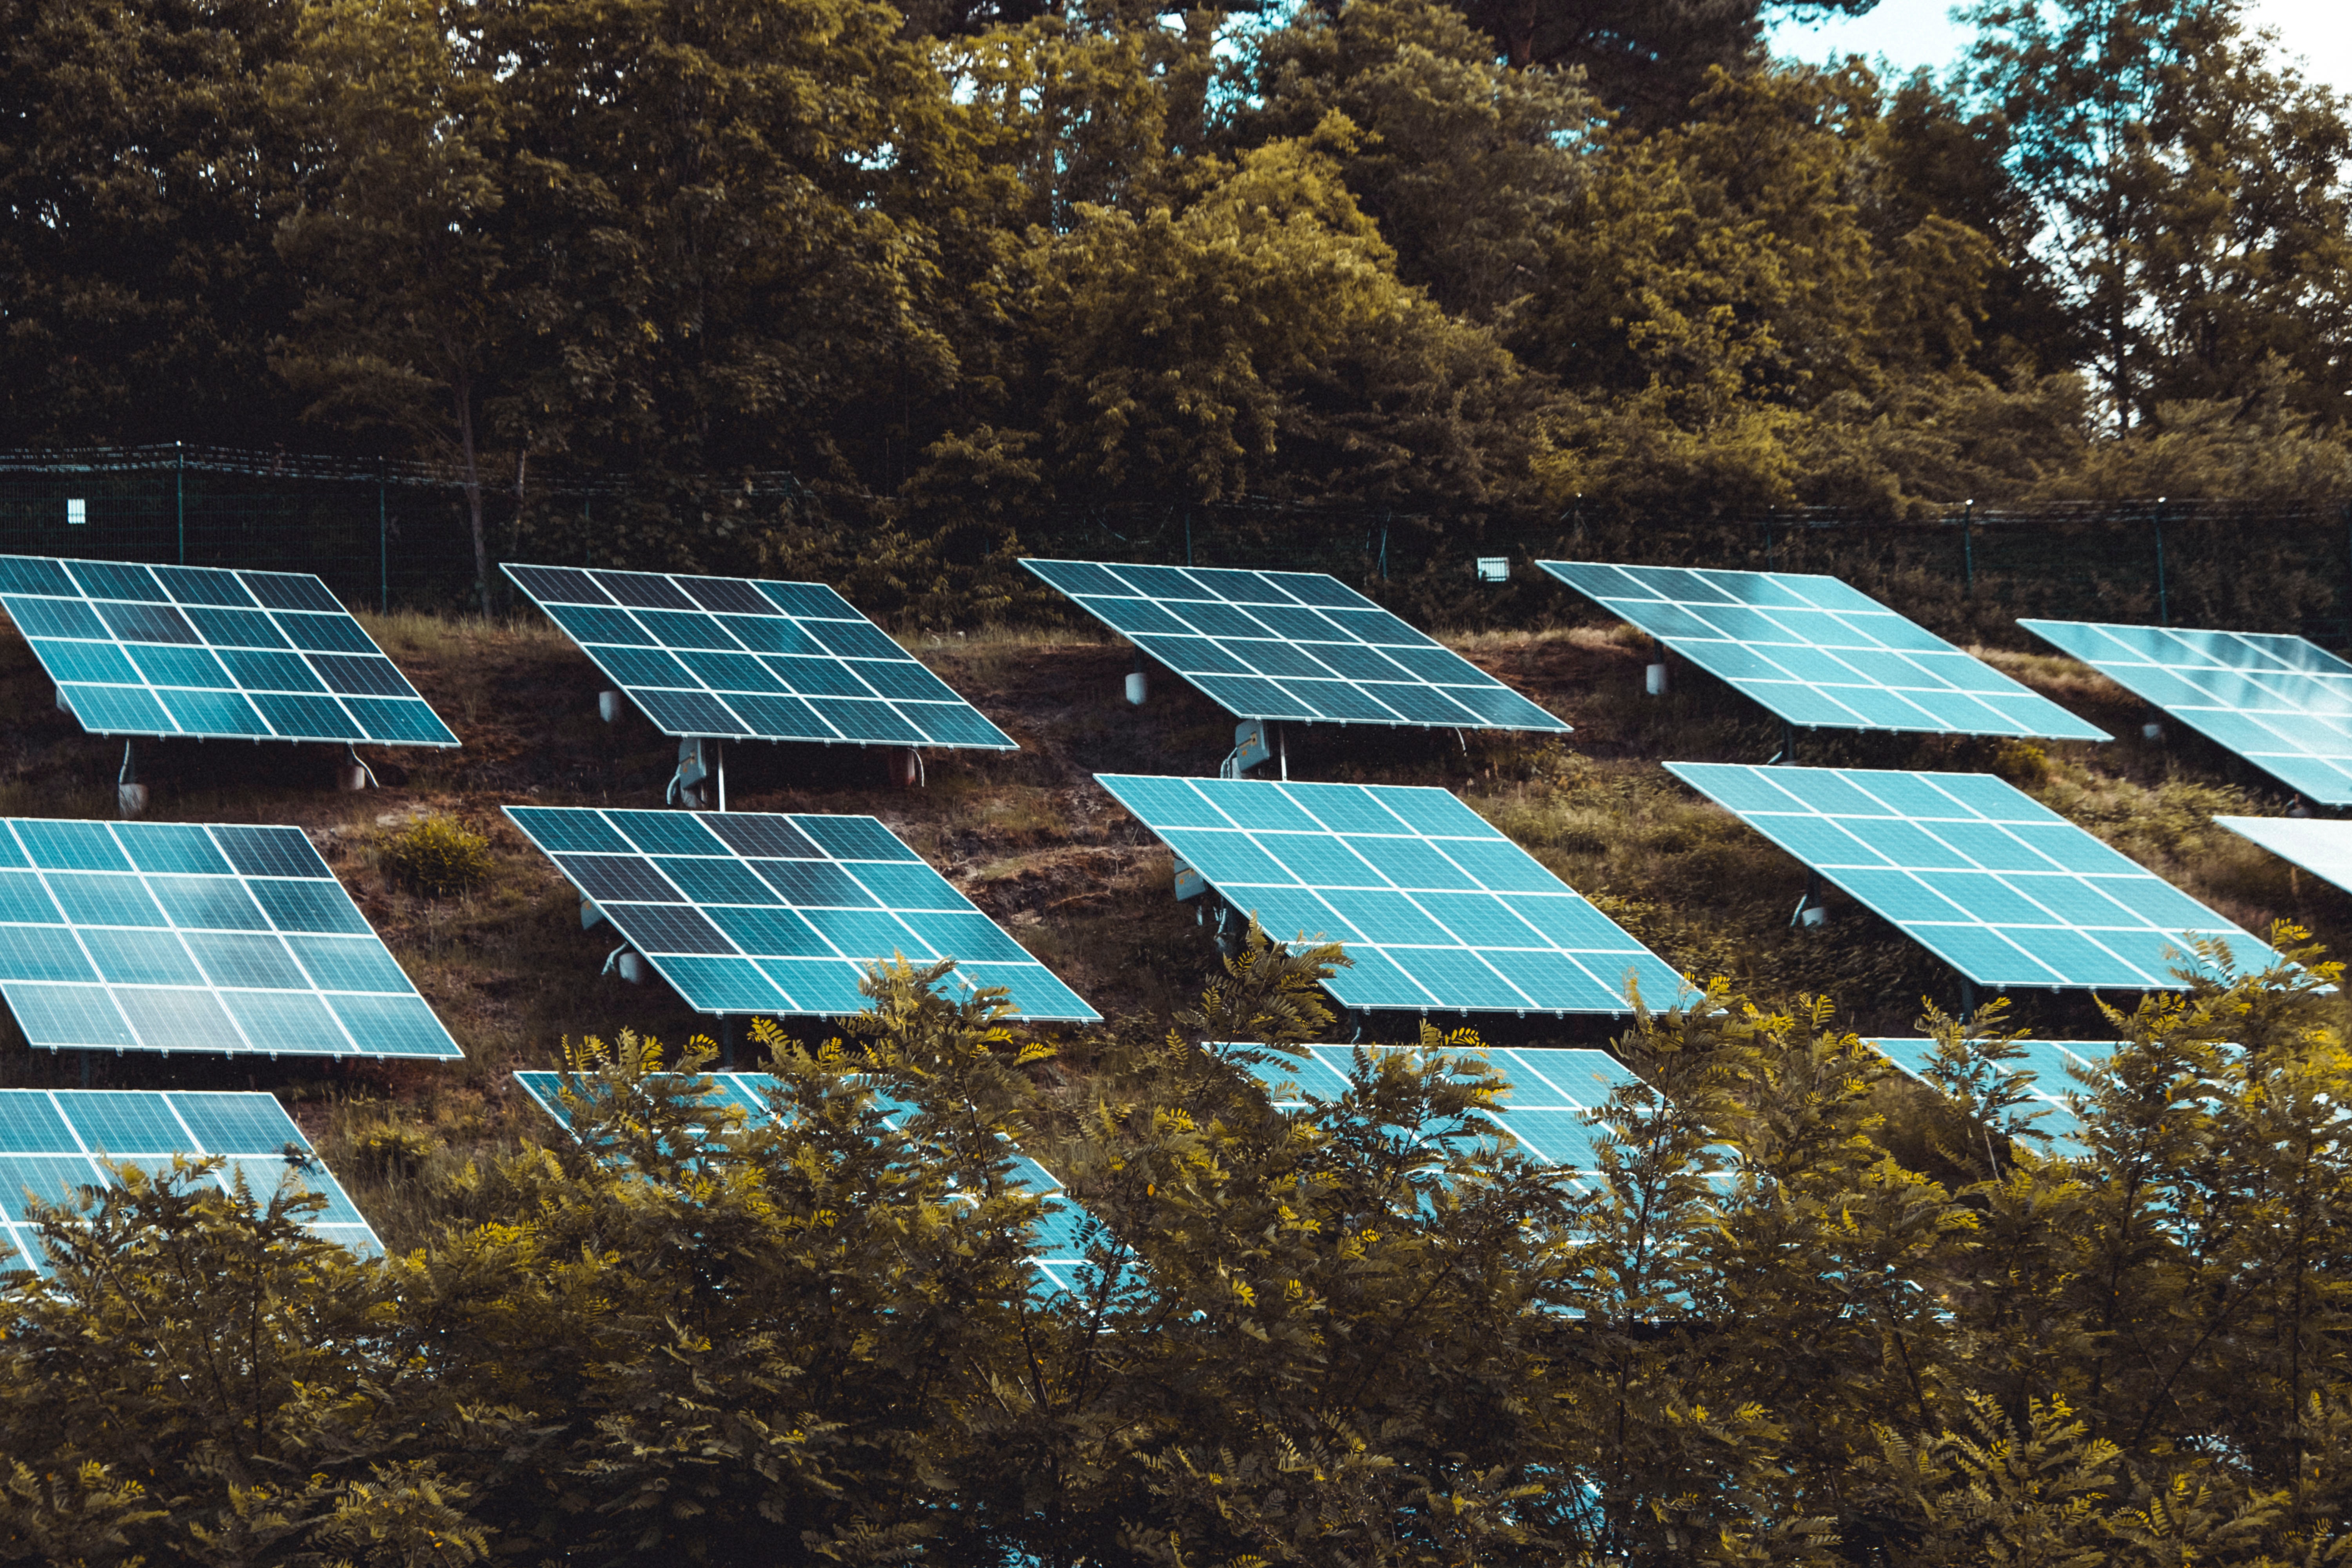 Solar panels_Moritz Kindler_Unsplash